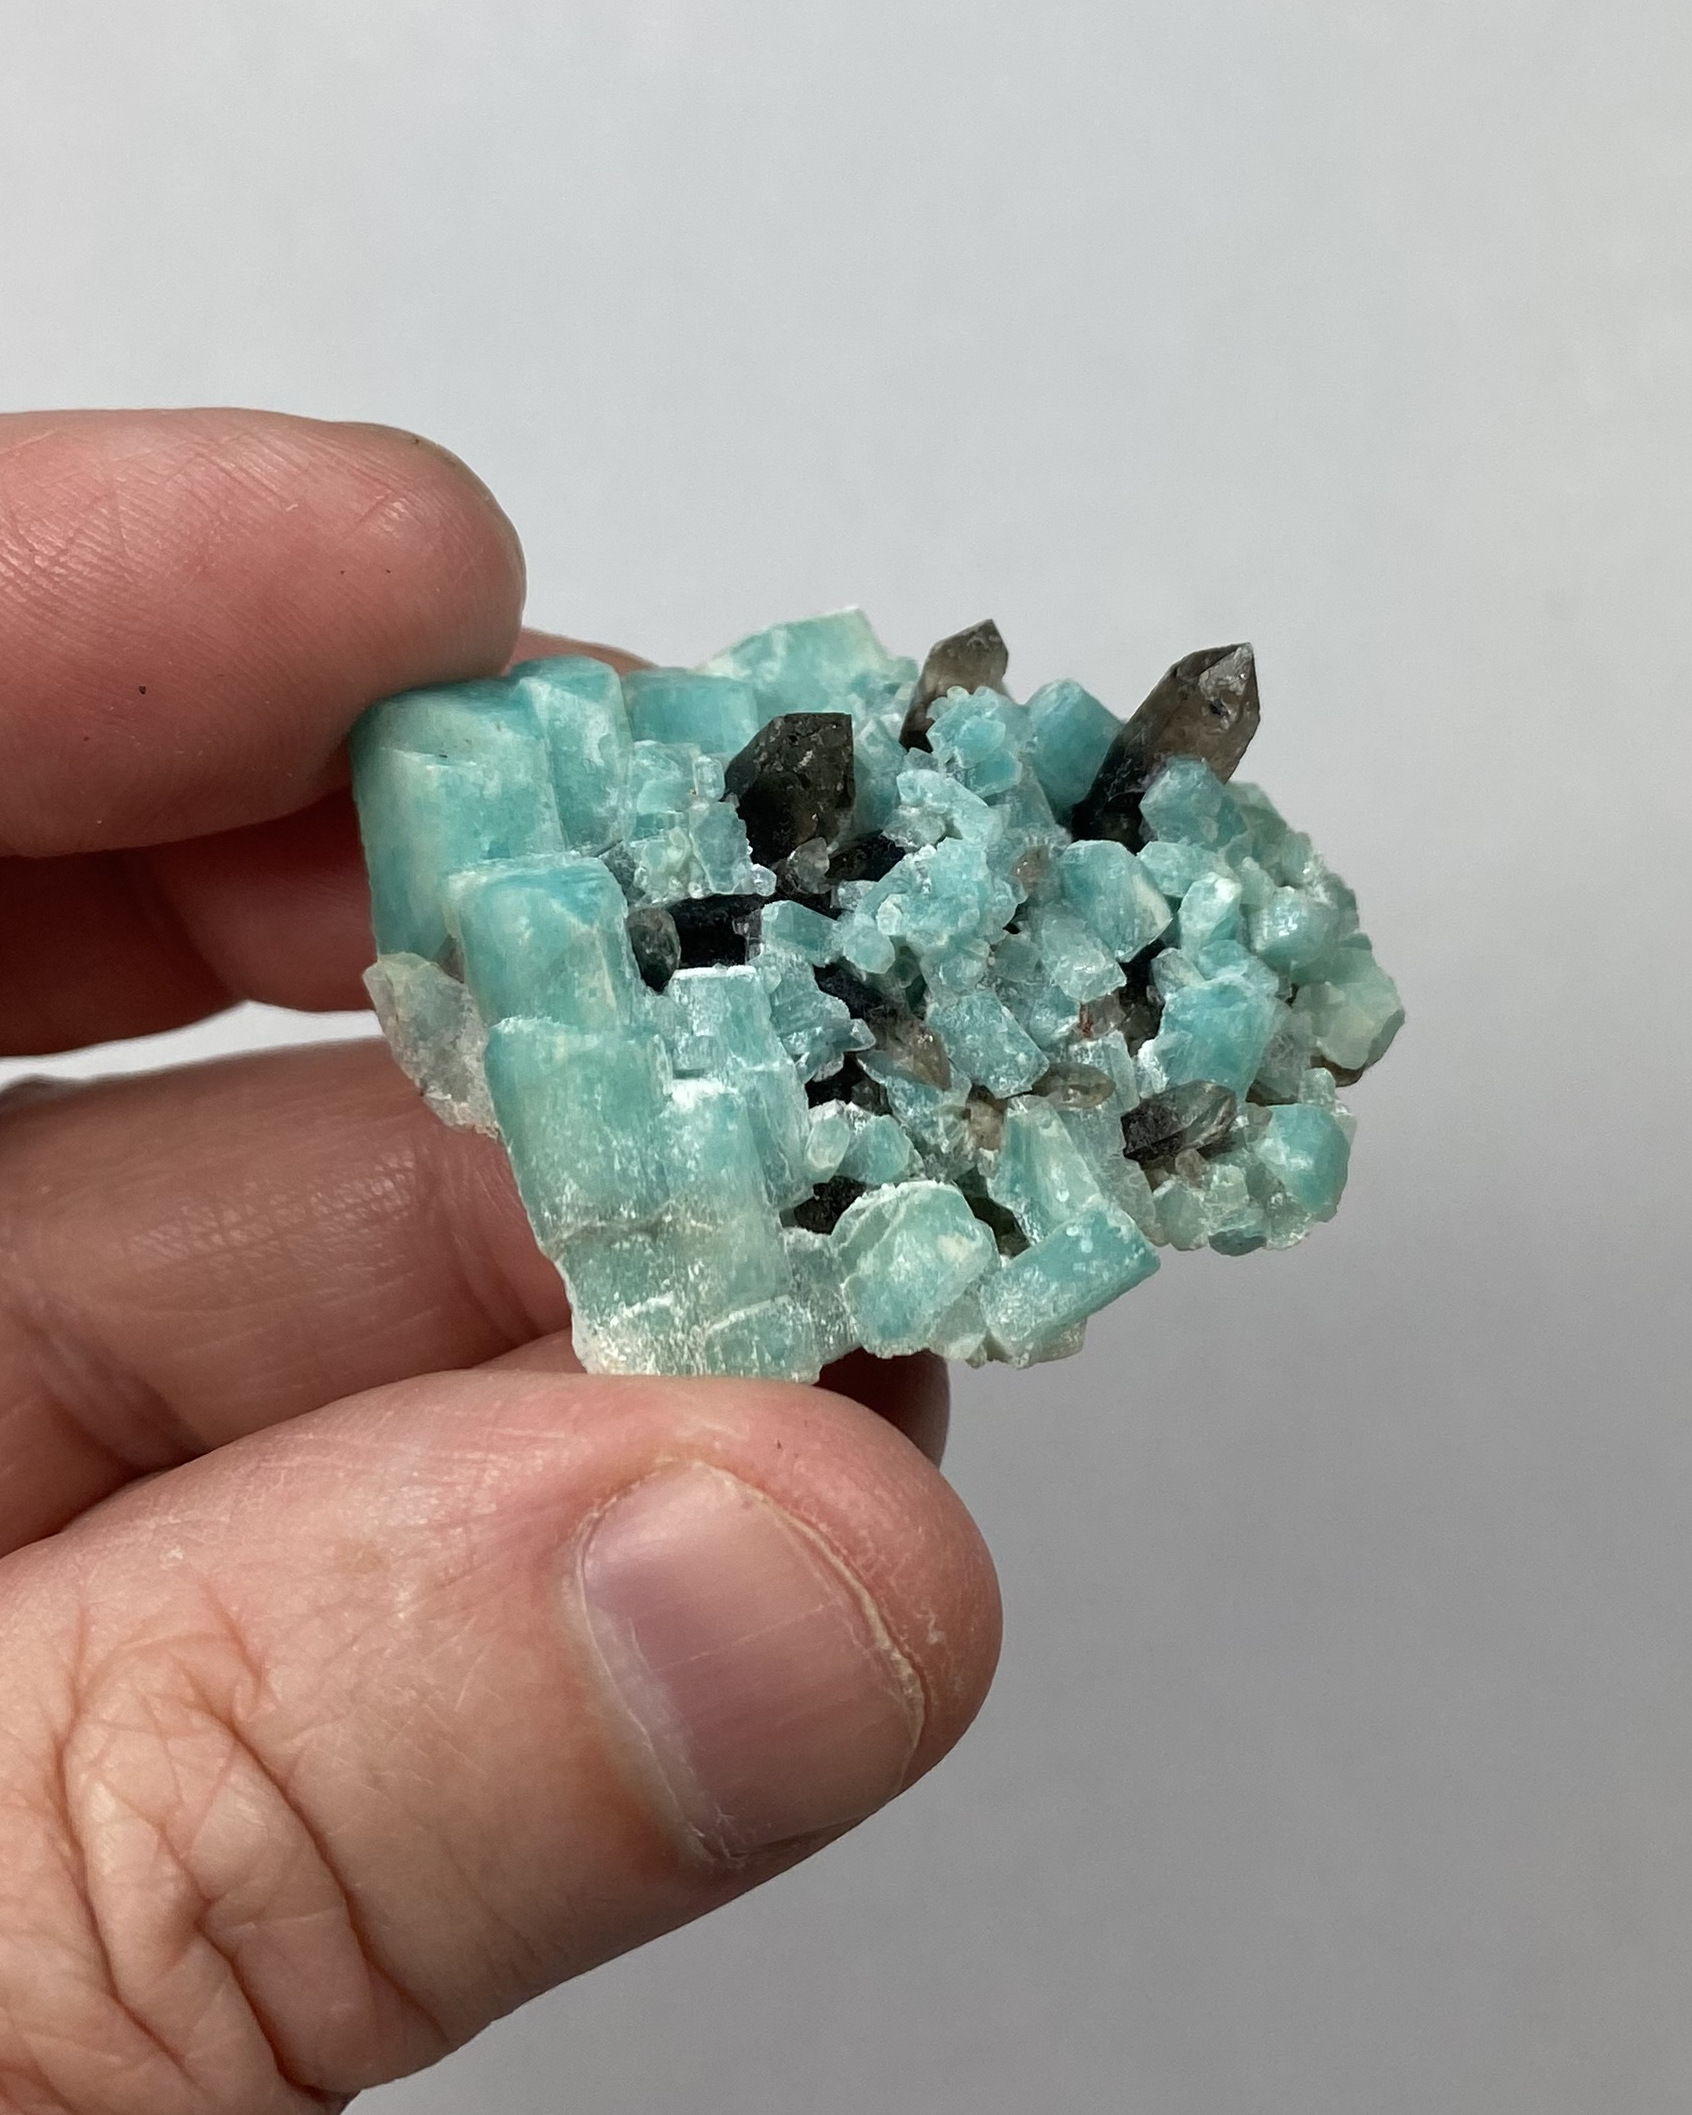 Amazonite and Smoky Quartz - The smallest amazonite crystals I've ever seen!